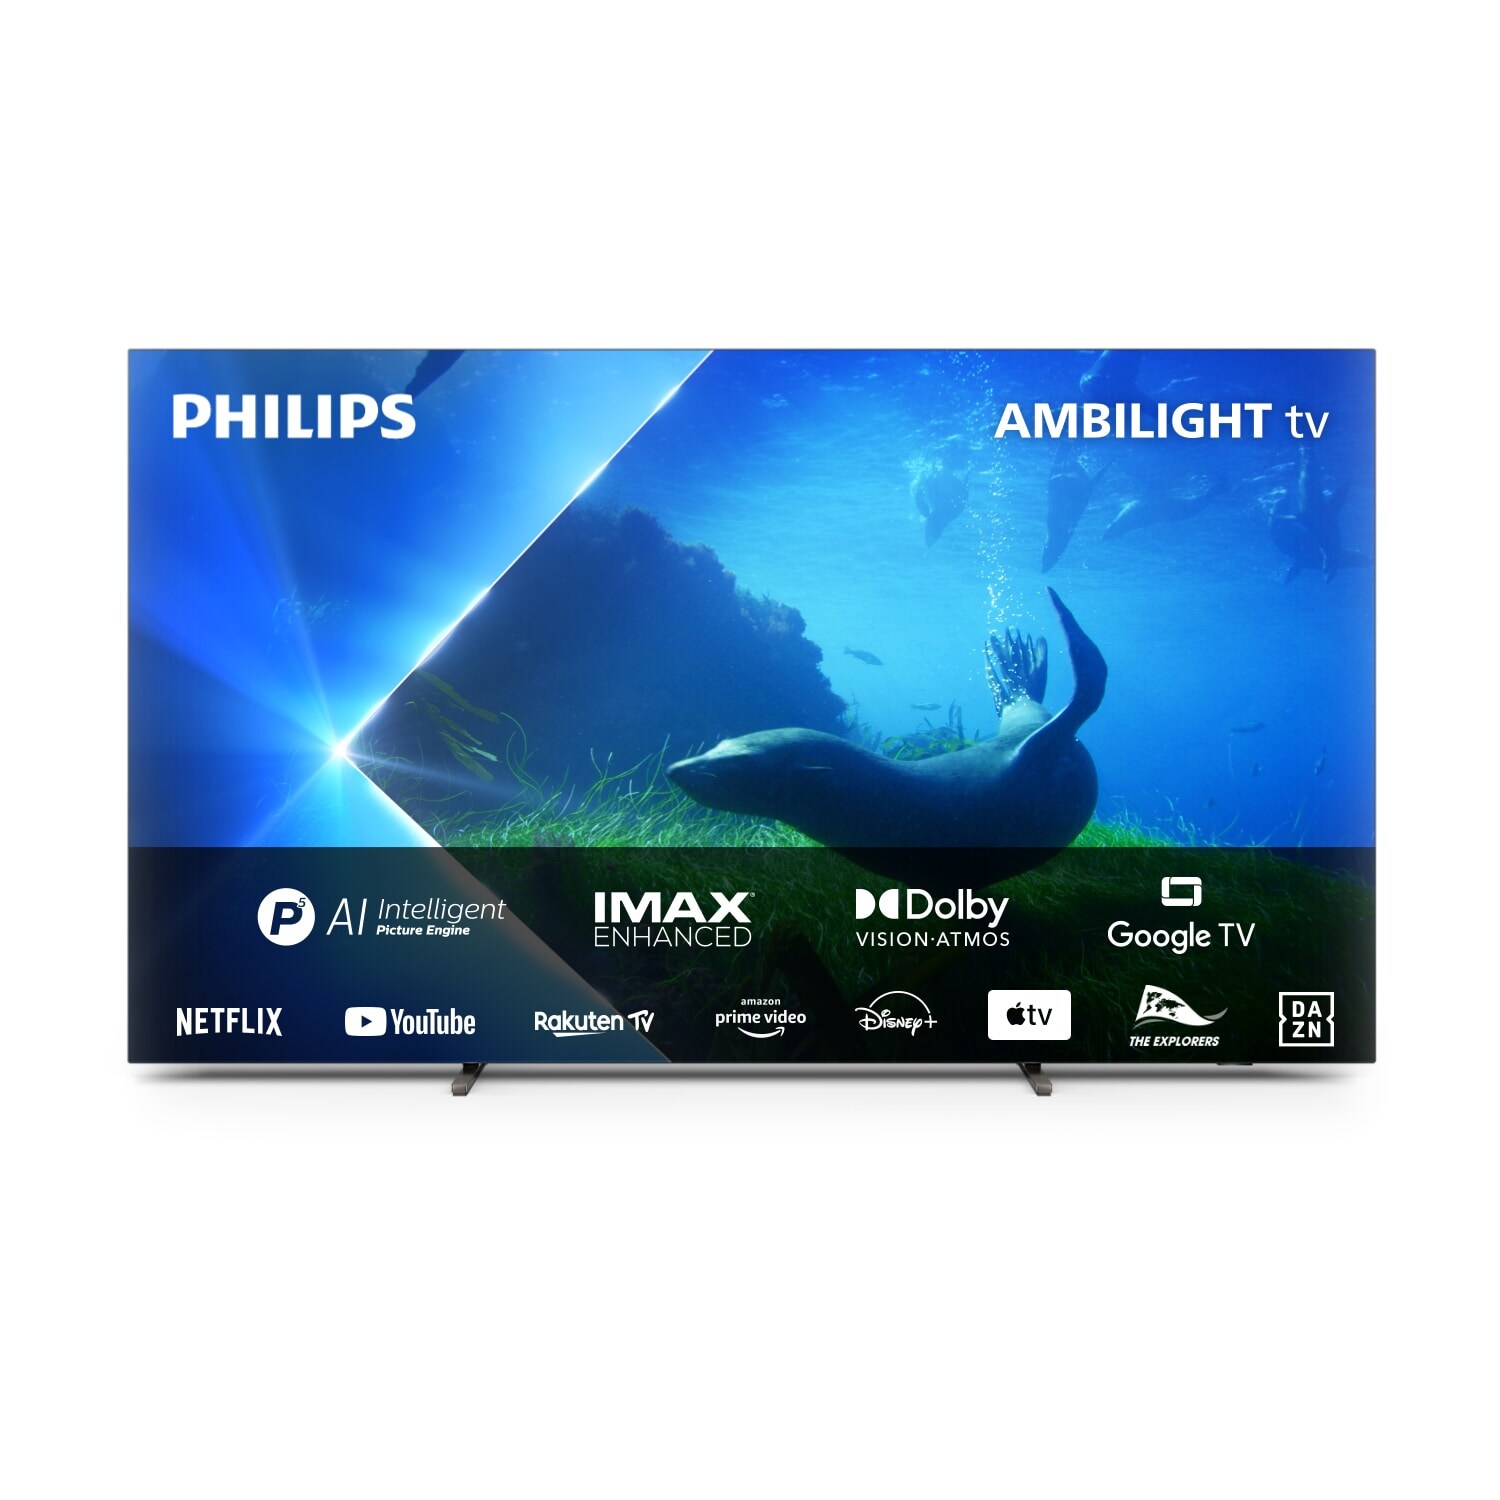 Philips 4K OLED TV, 48OLED808